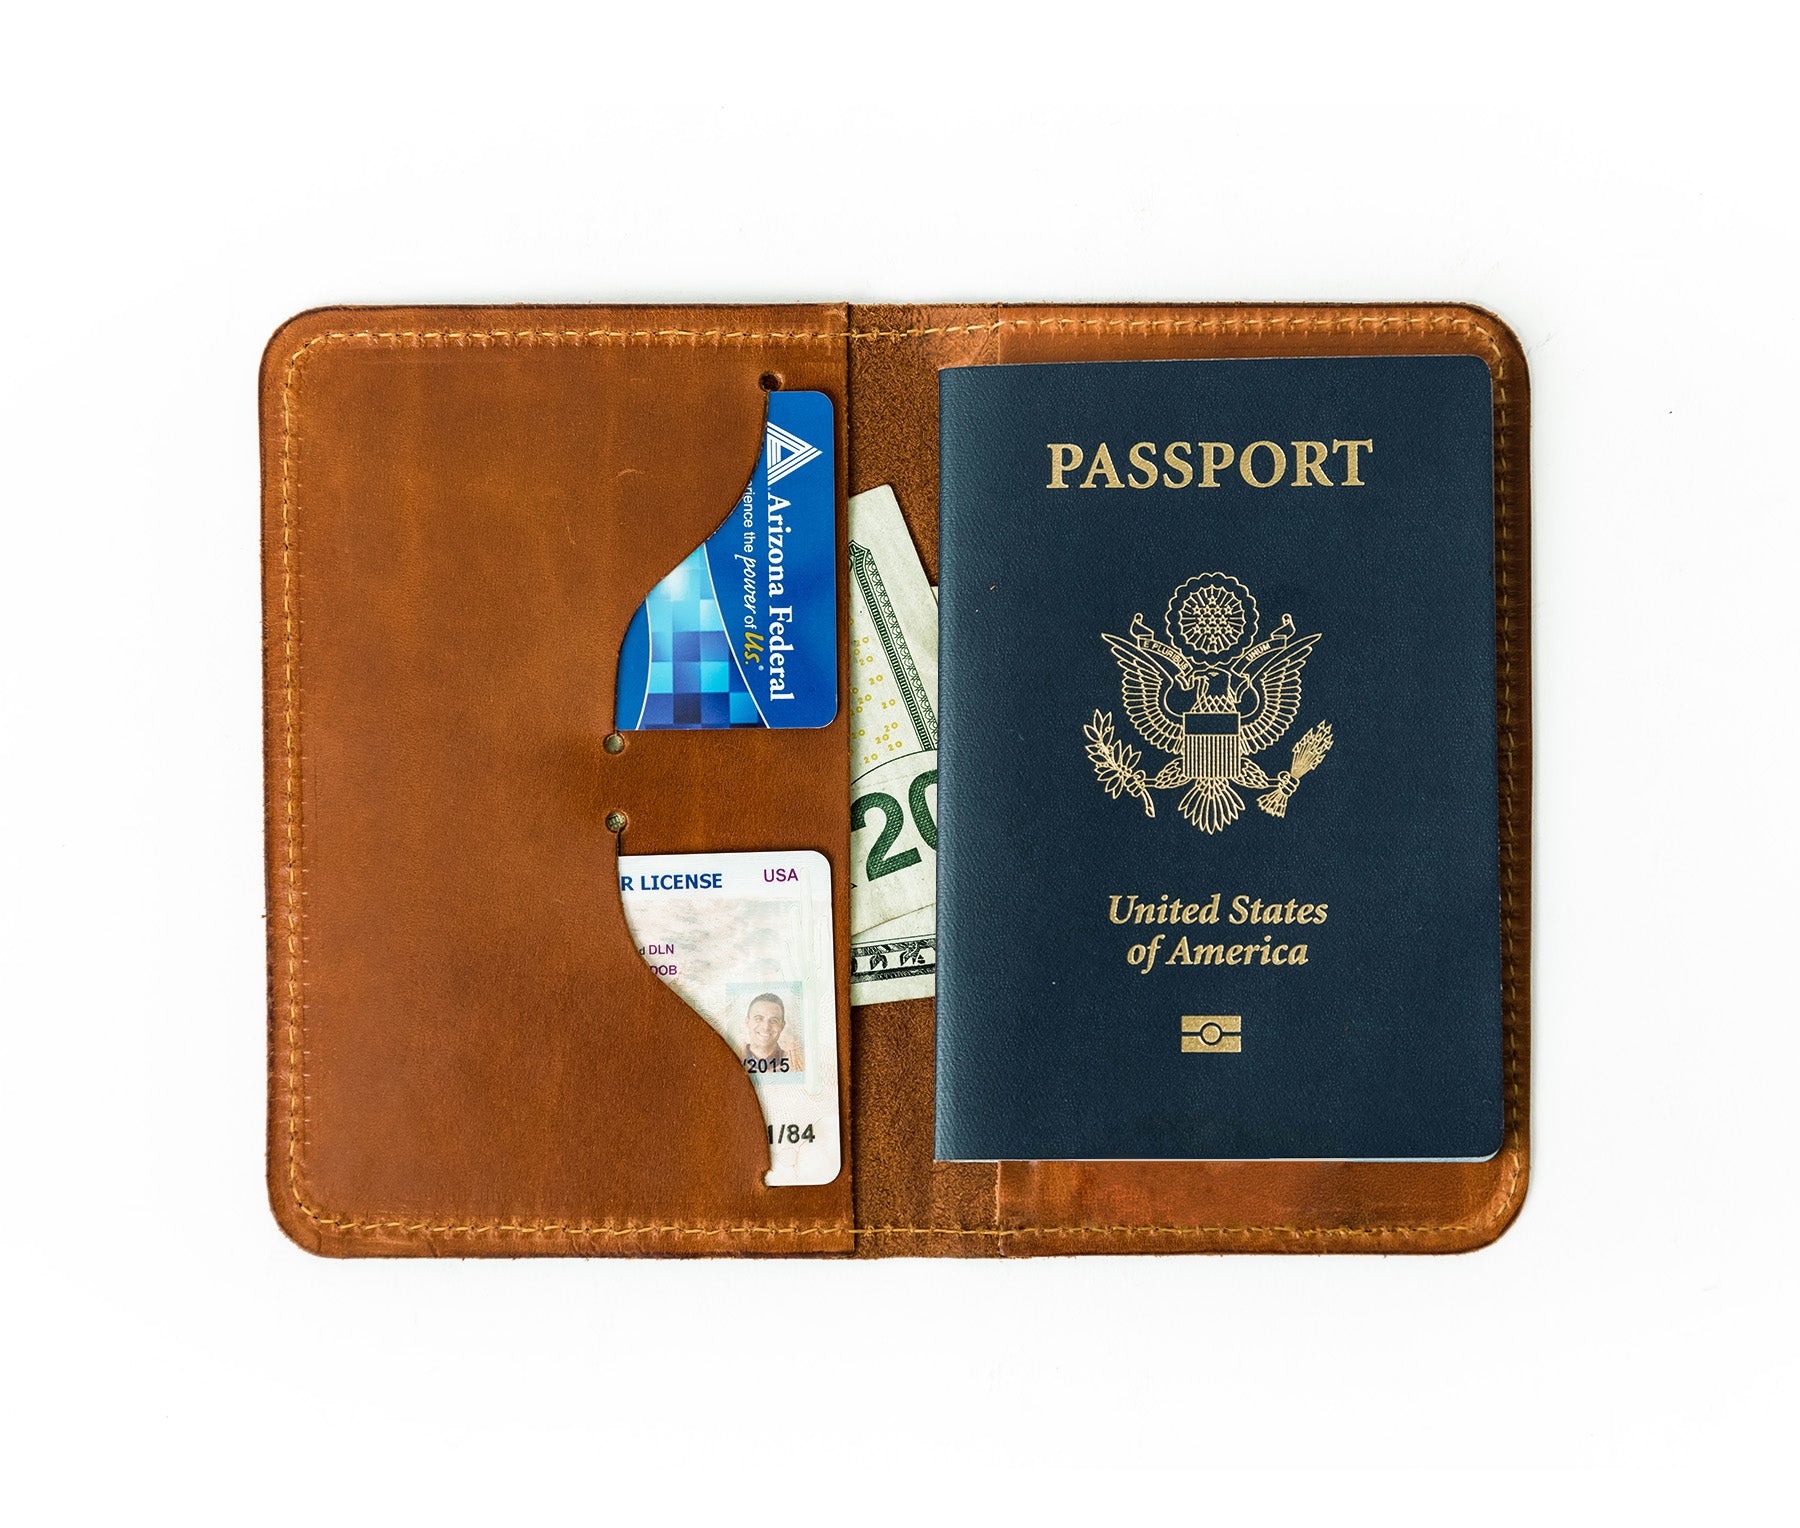 Passport Cover - Life Is Short 4x6